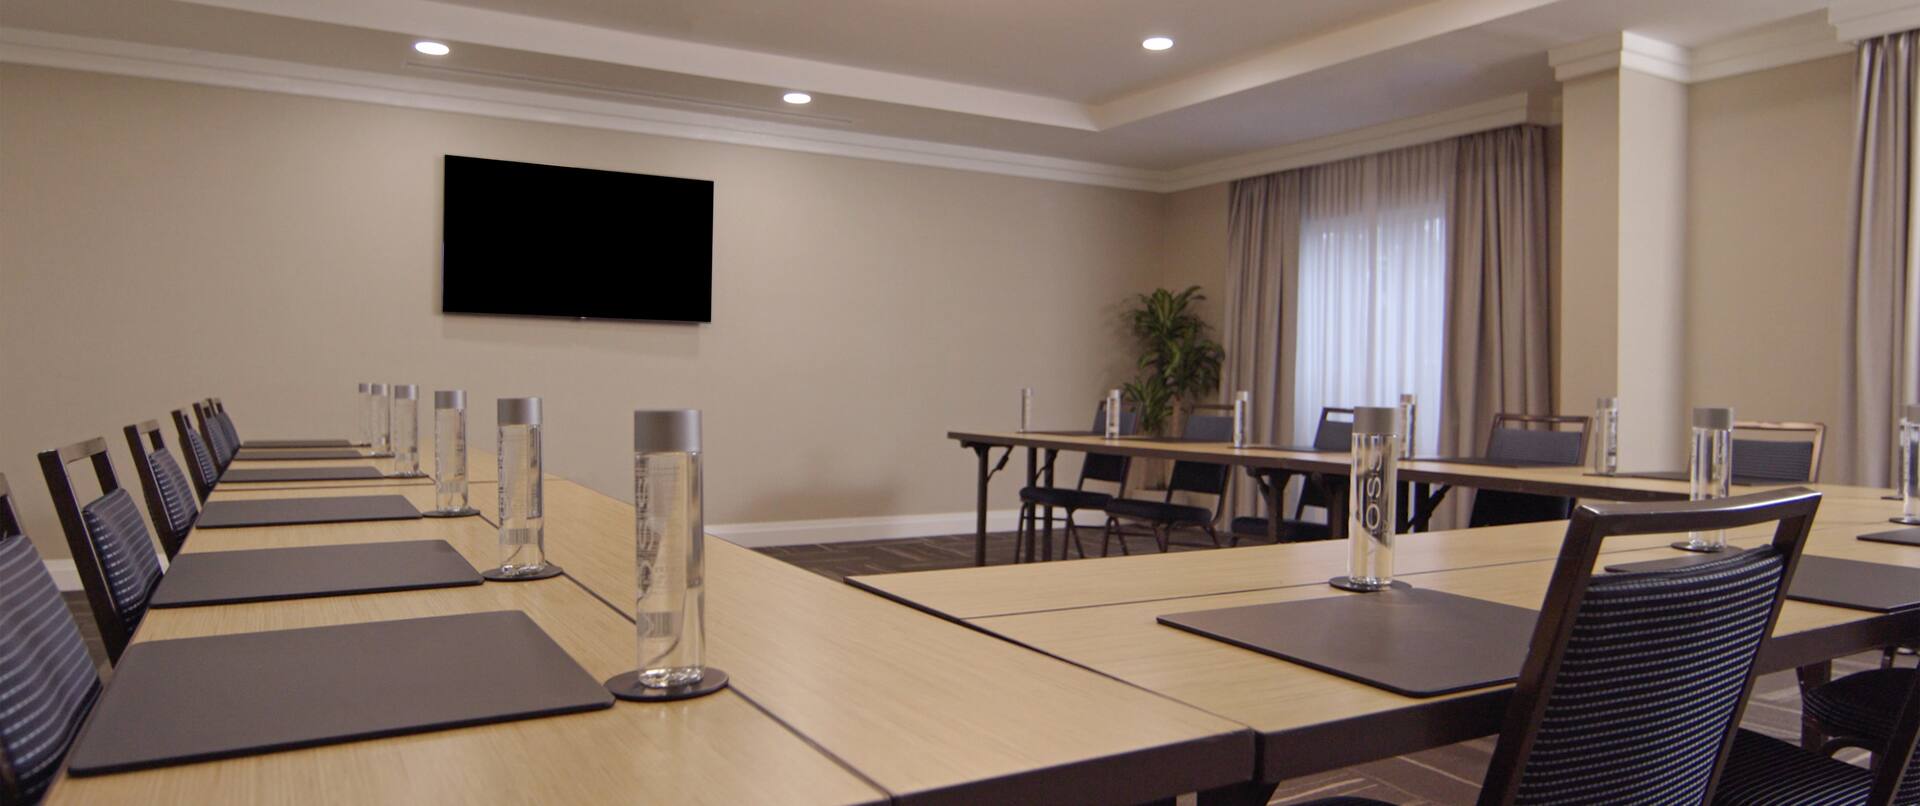 Pegasus Meeting Room Setup U Style with HDTV